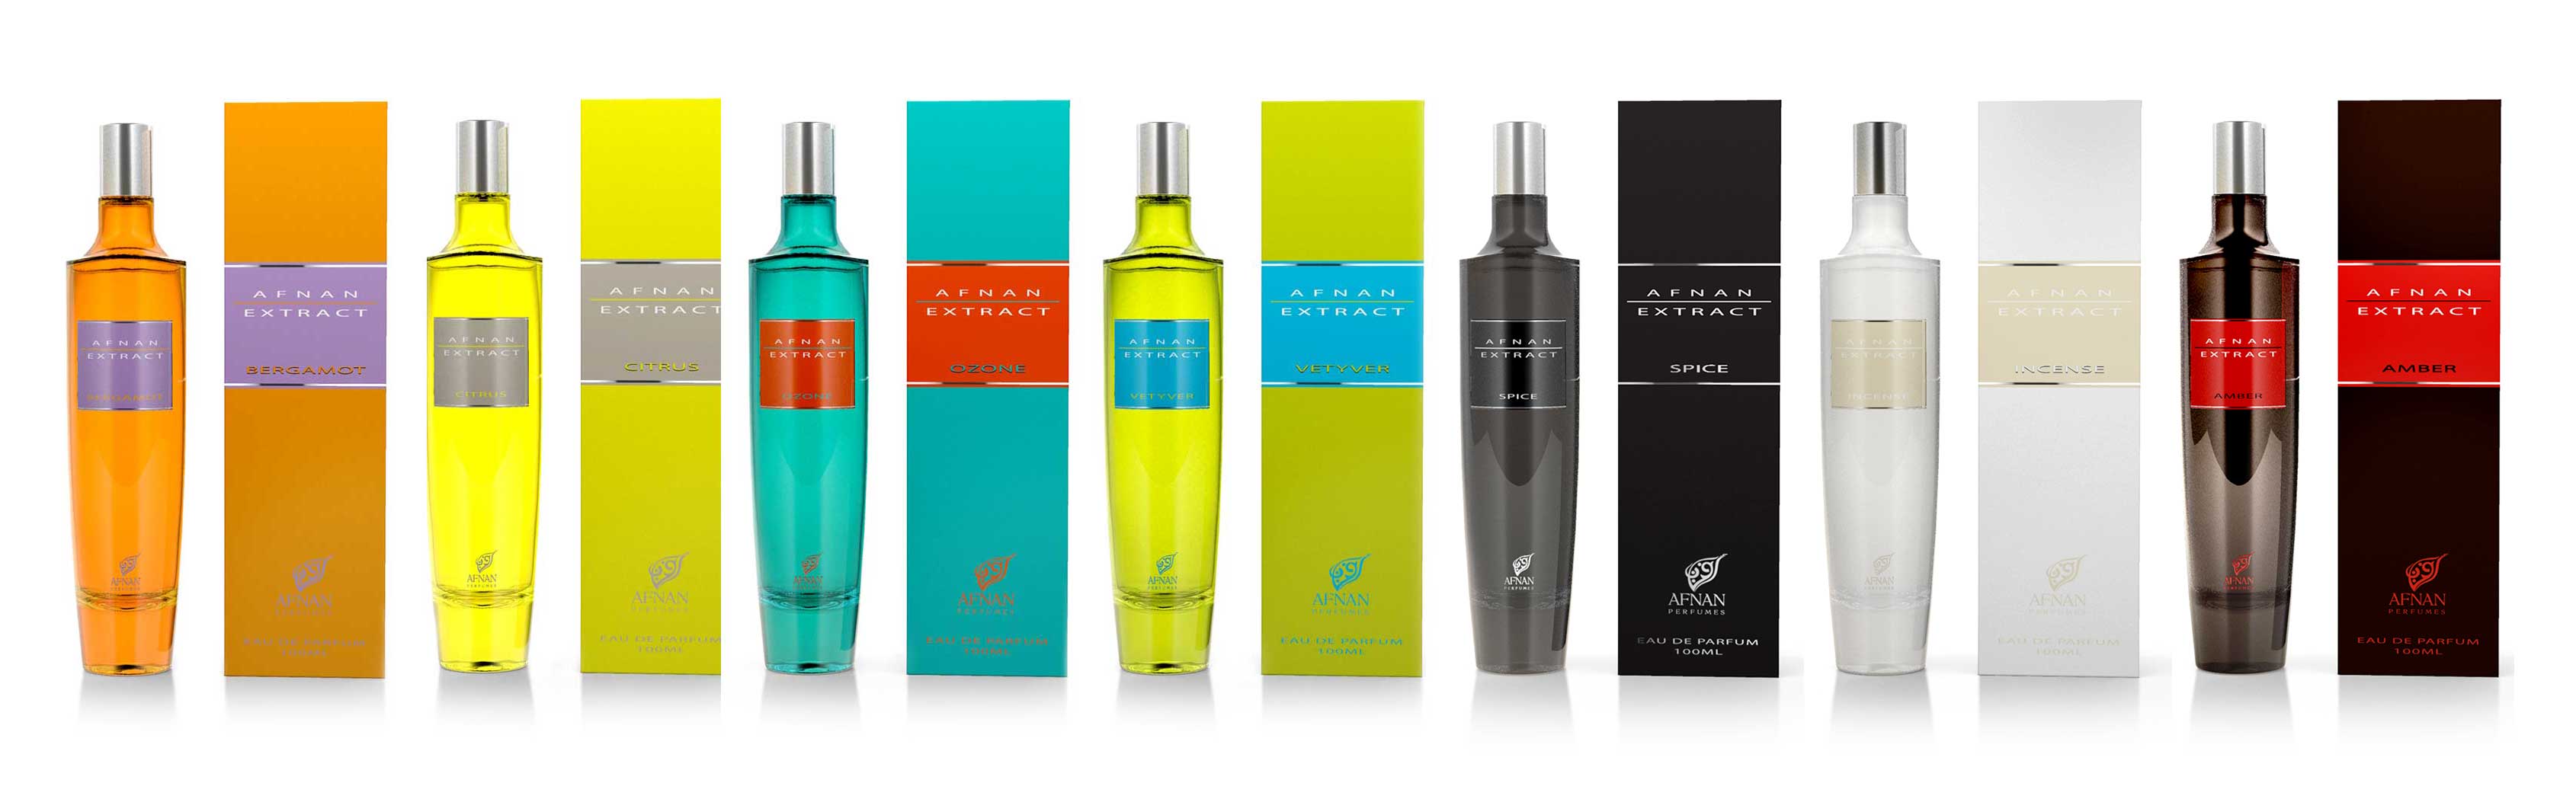 Afnan Extrait range of perfumes